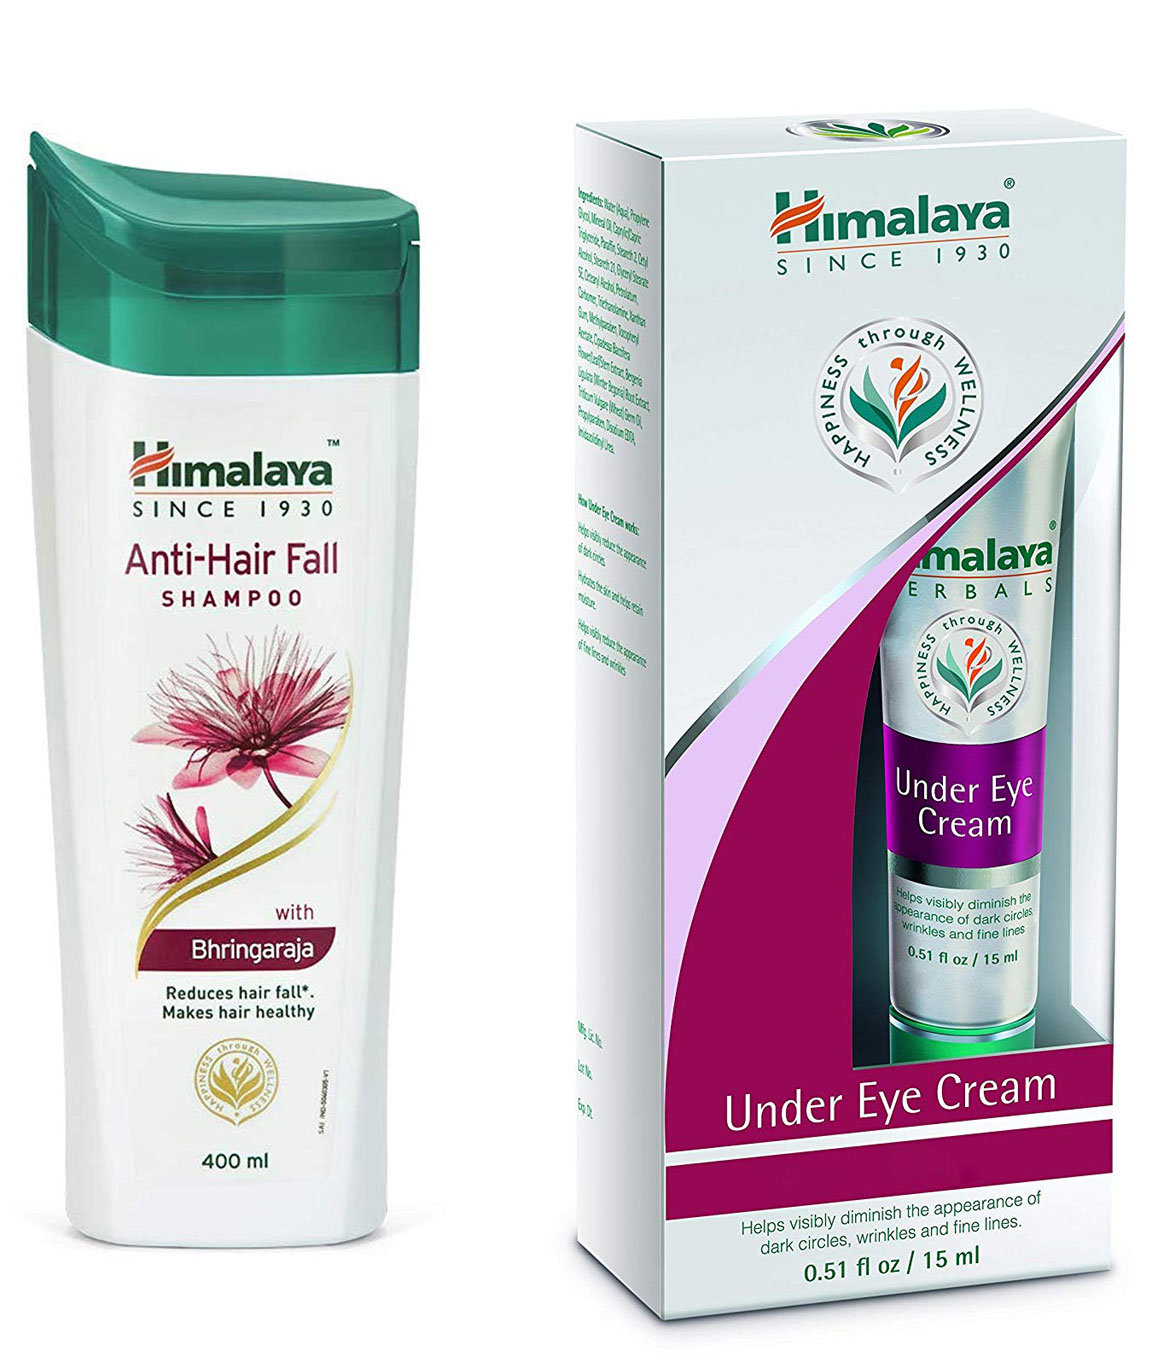 Himalaya Herbals Anti Hair Fall Shampoo, 400ml & Herbals Under Eye Cream, 15ml Combo
by Himalaya